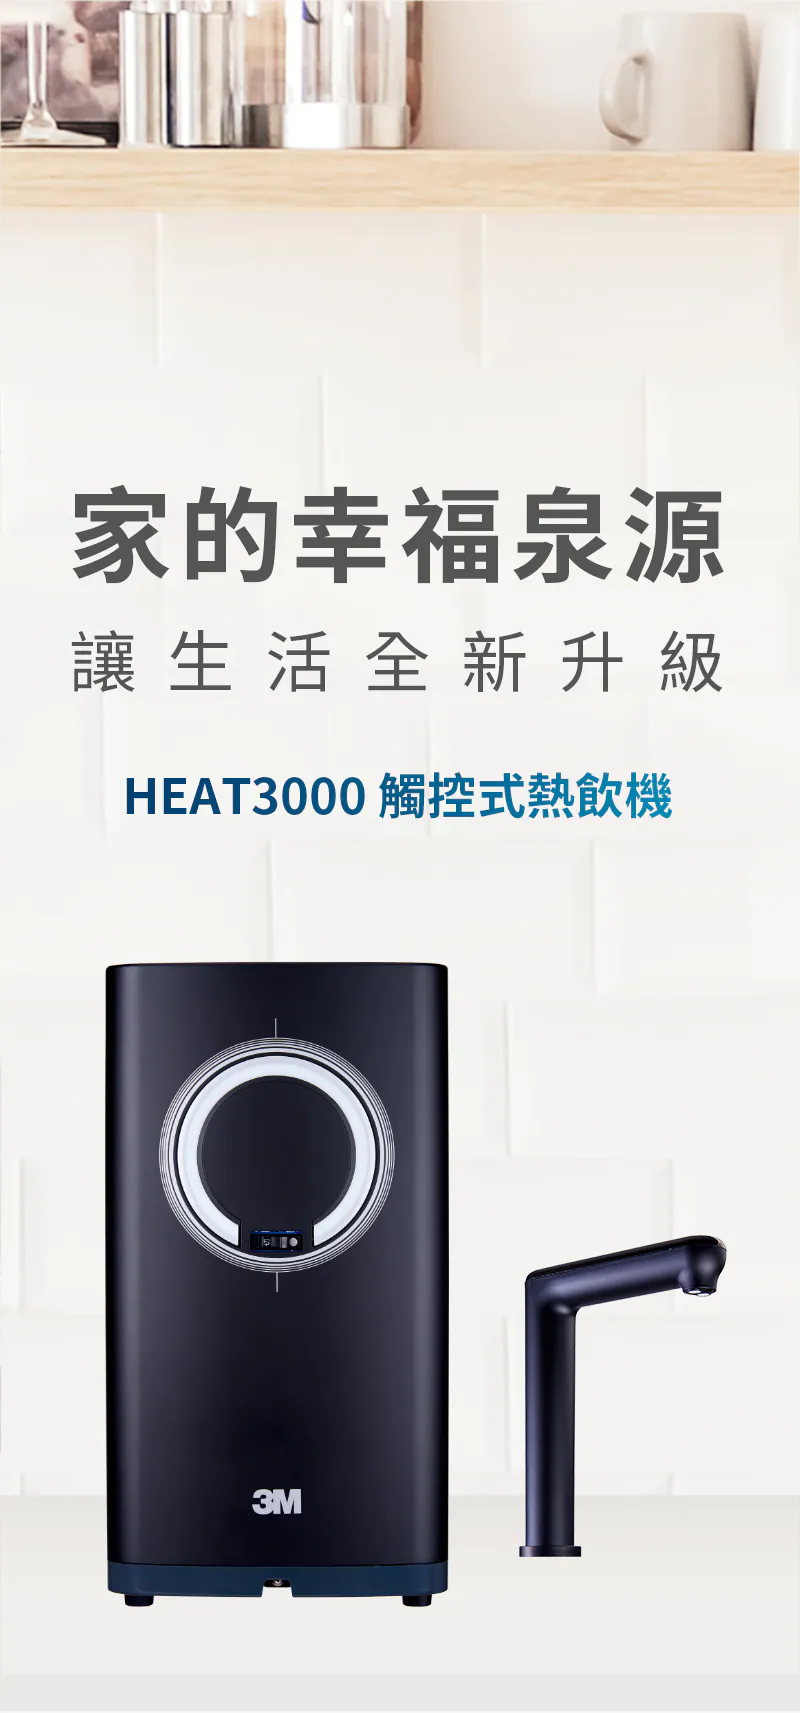 heat3000廚下型熱飲機